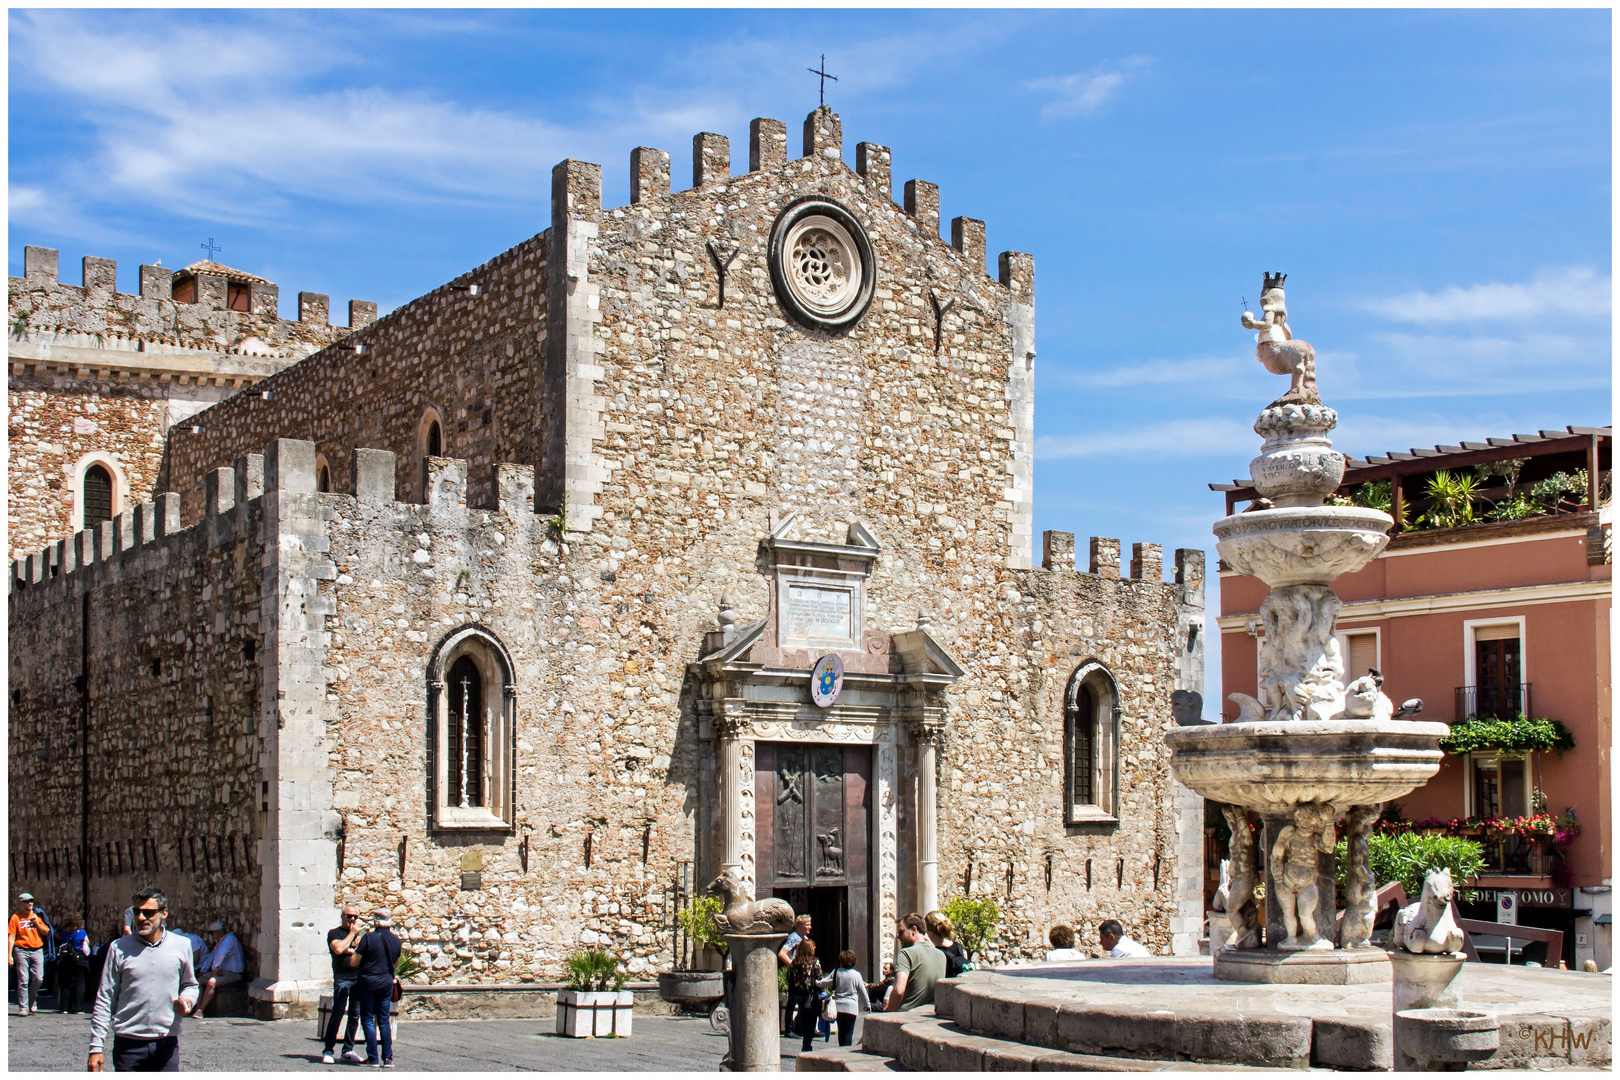 Dom St. Nicolò in Taormina aus dem 15. Jh. (Sizilien)